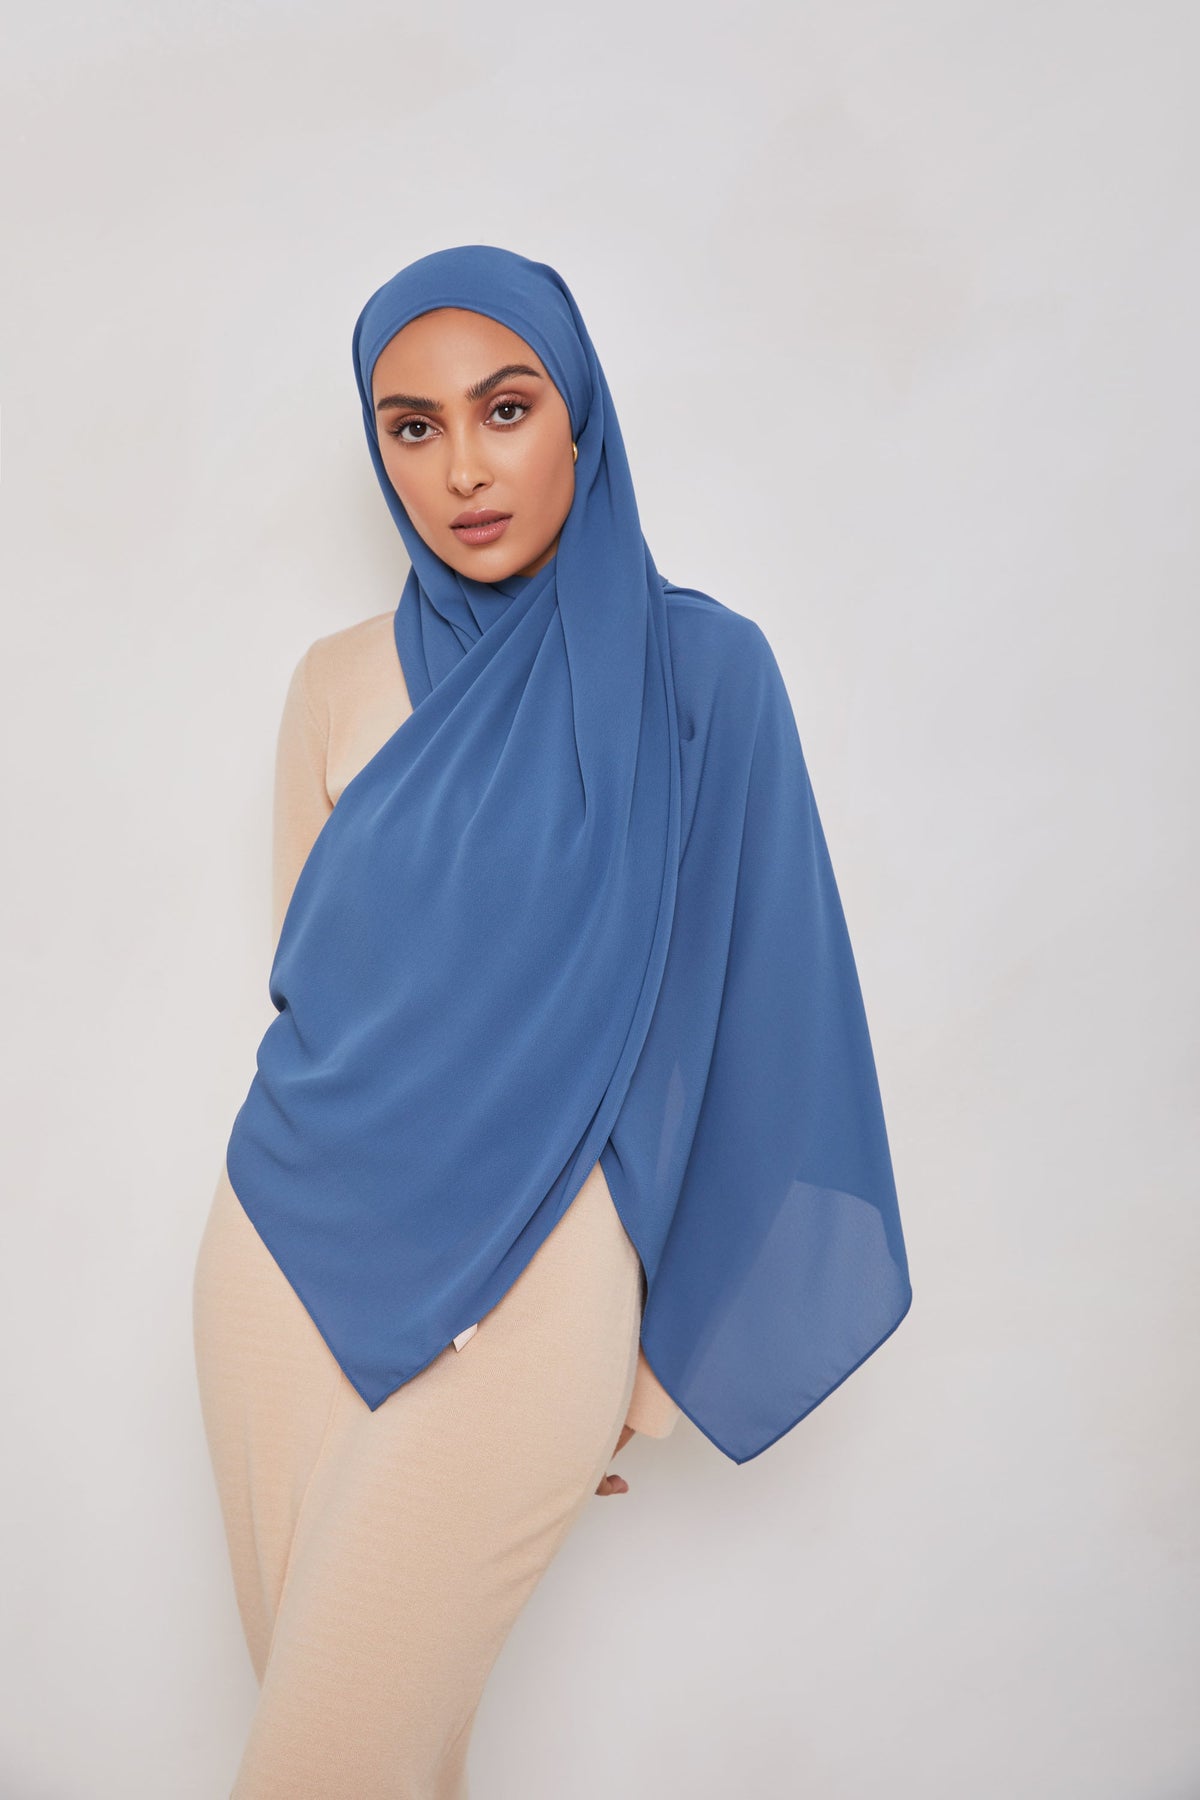 TEXTURE Everyday Chiffon Hijab - Favorite Denim epschoolboard 